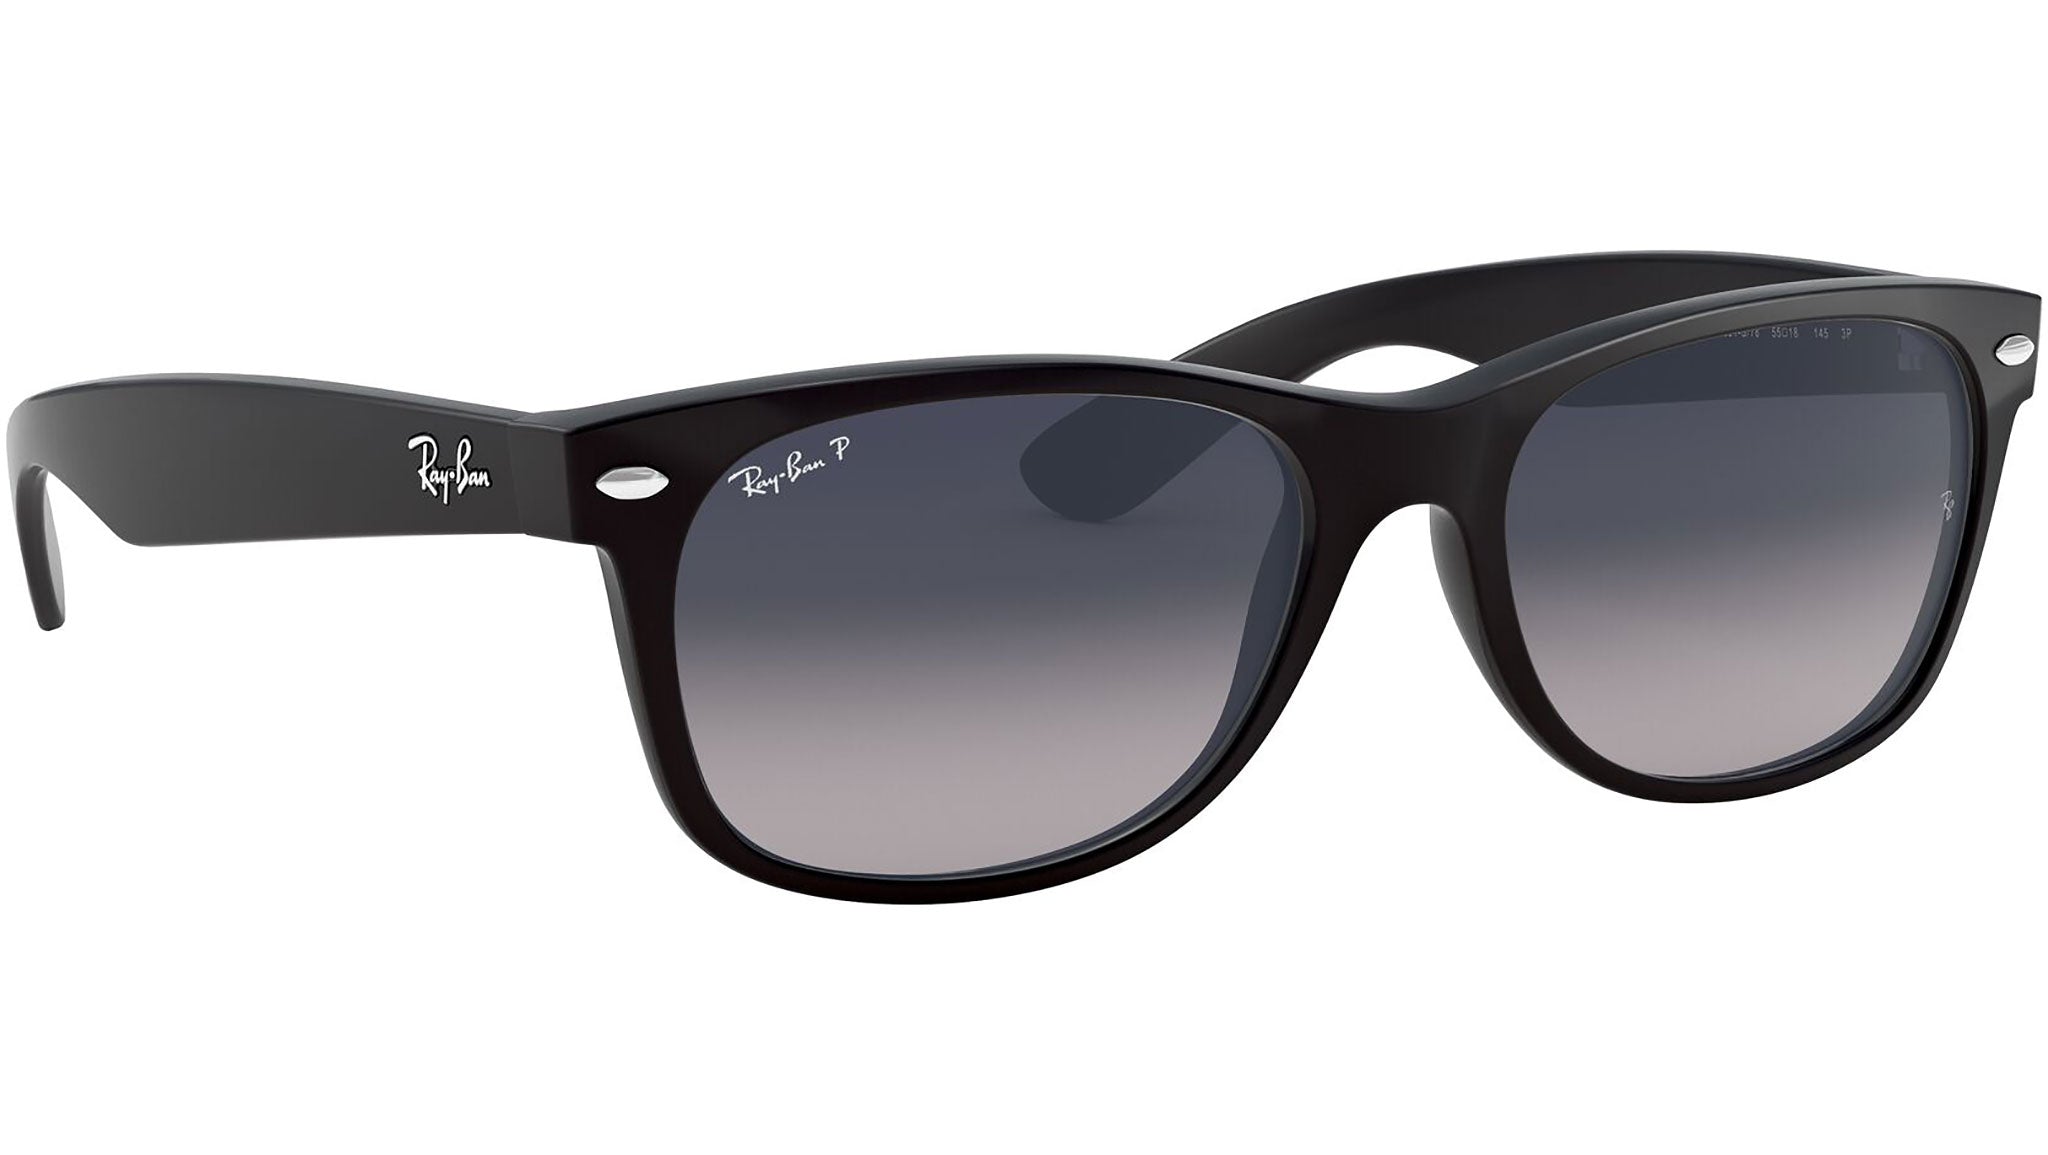 Details more than 200 new wayfarer polarized sunglasses latest